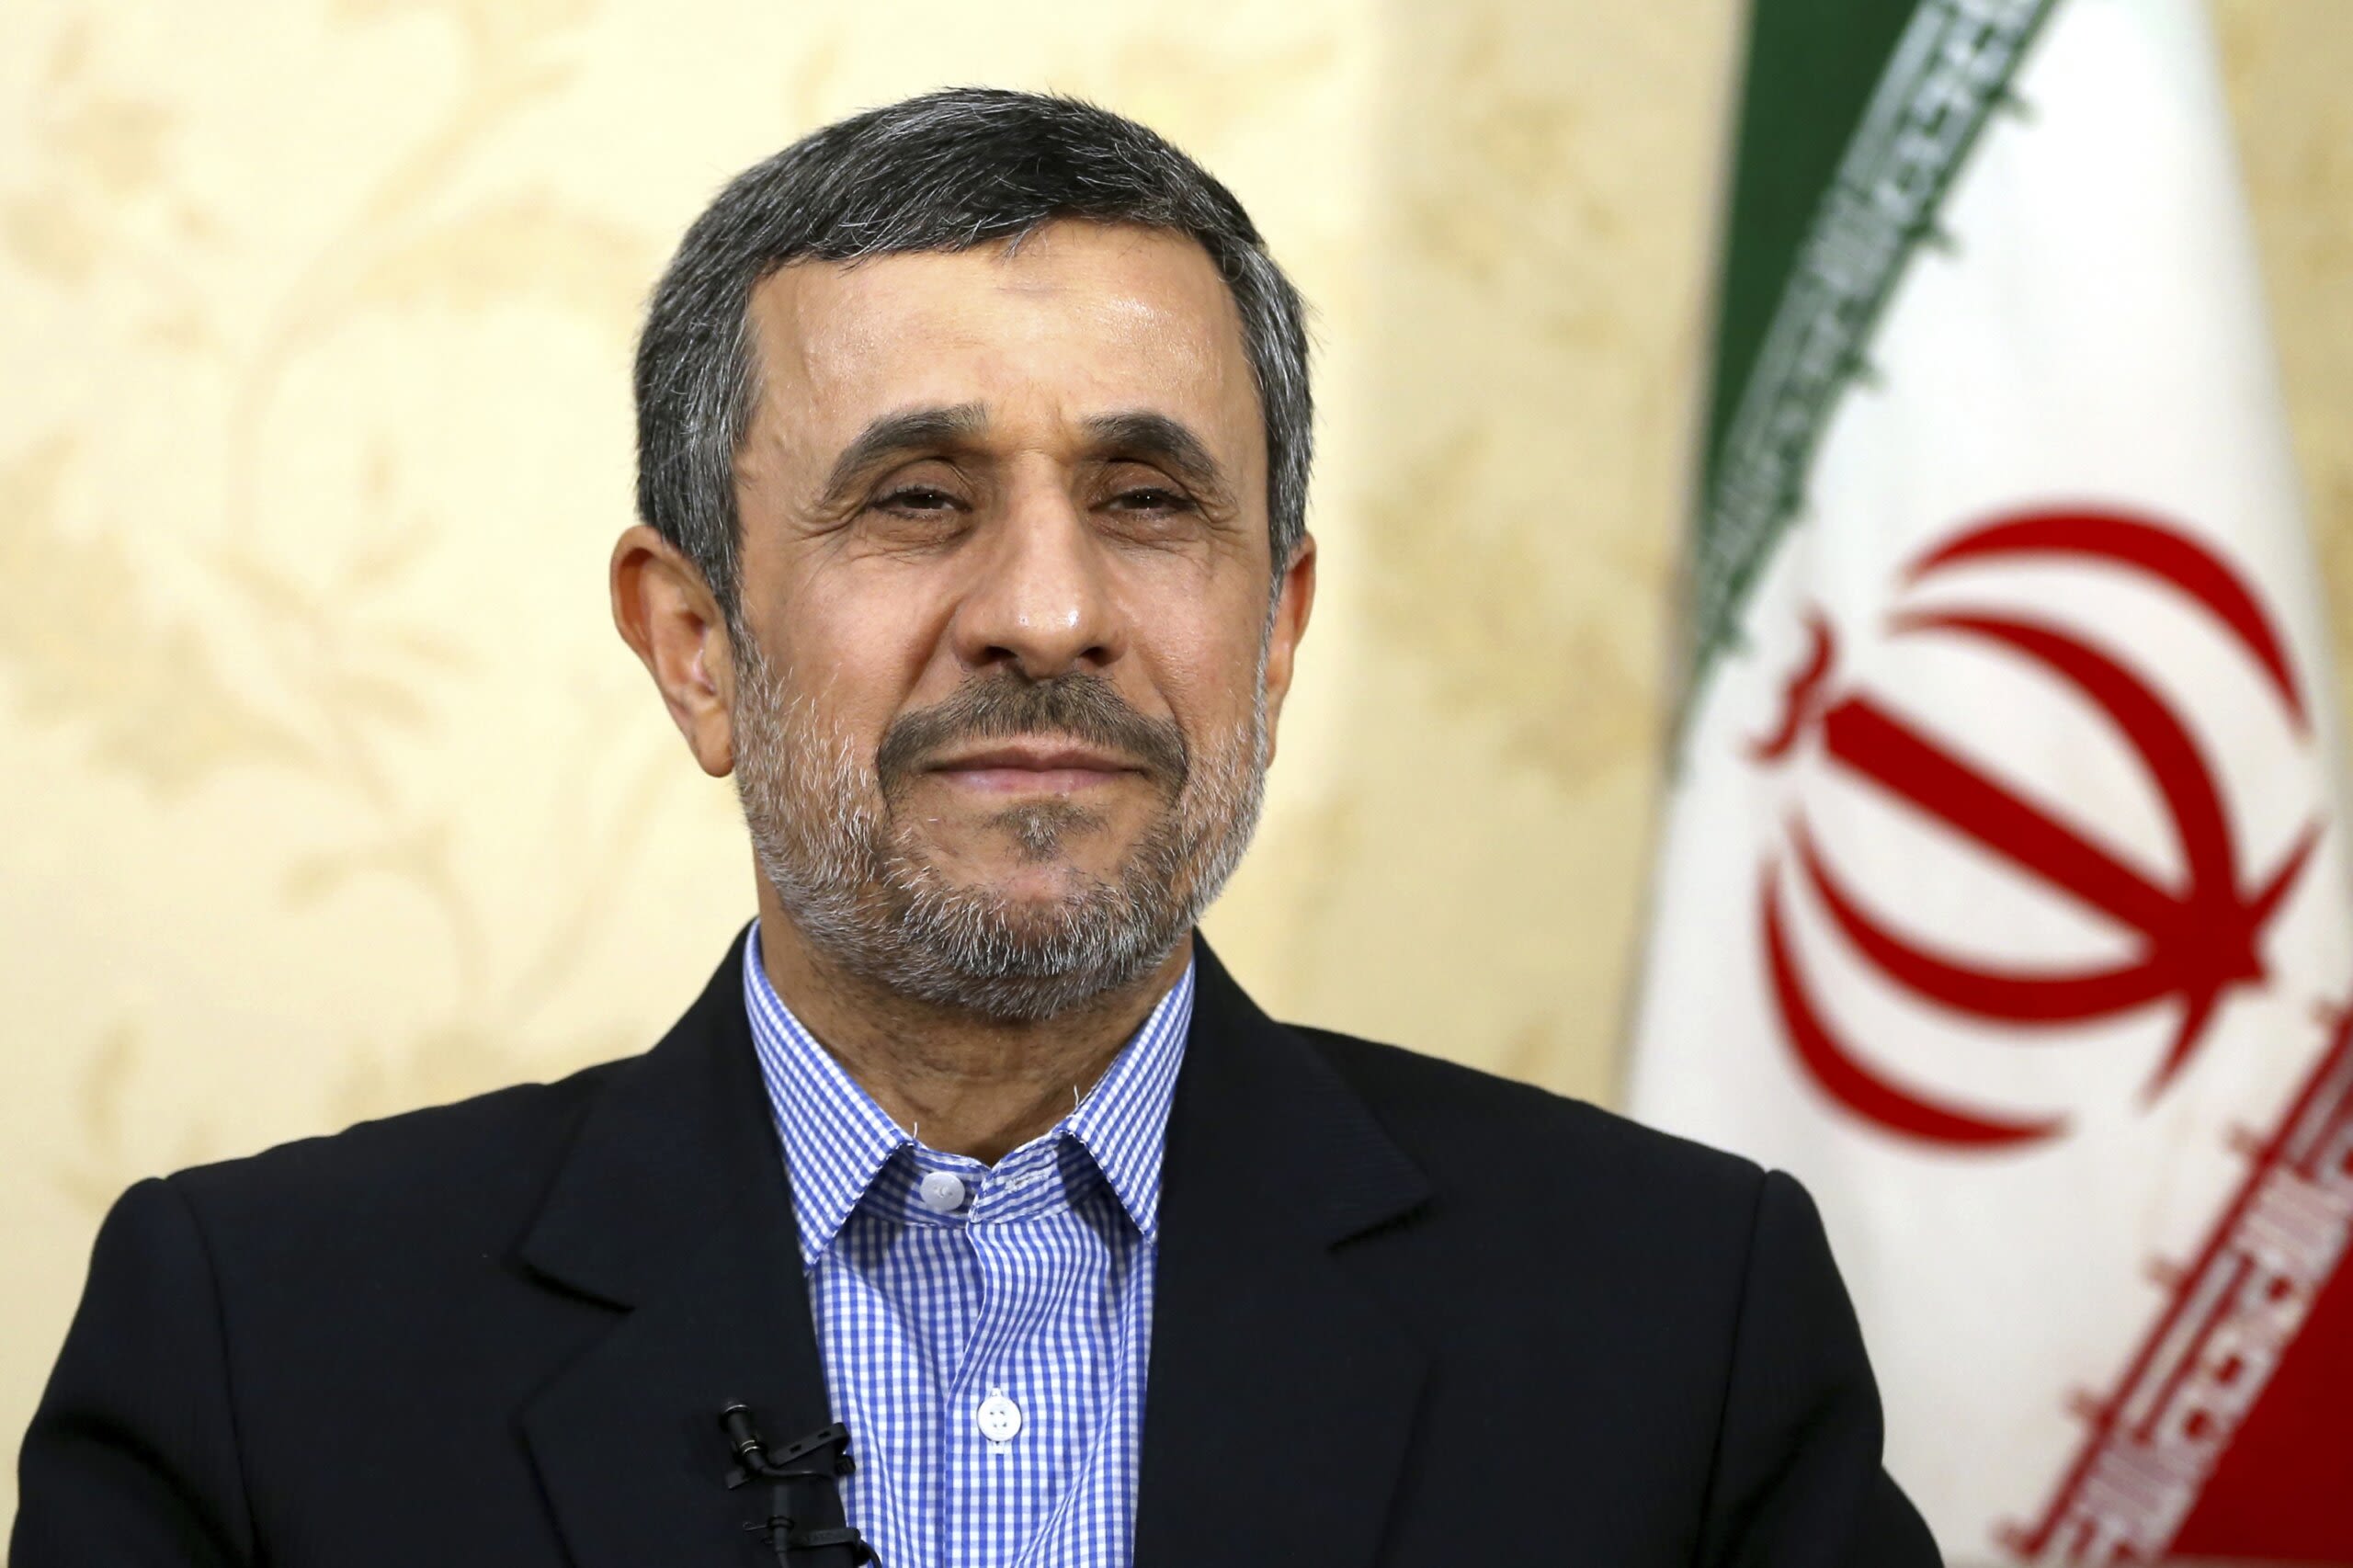 Iran’s hard-line former President Mahmoud Ahmadinejad registers for June 28 presidential election - WTOP News